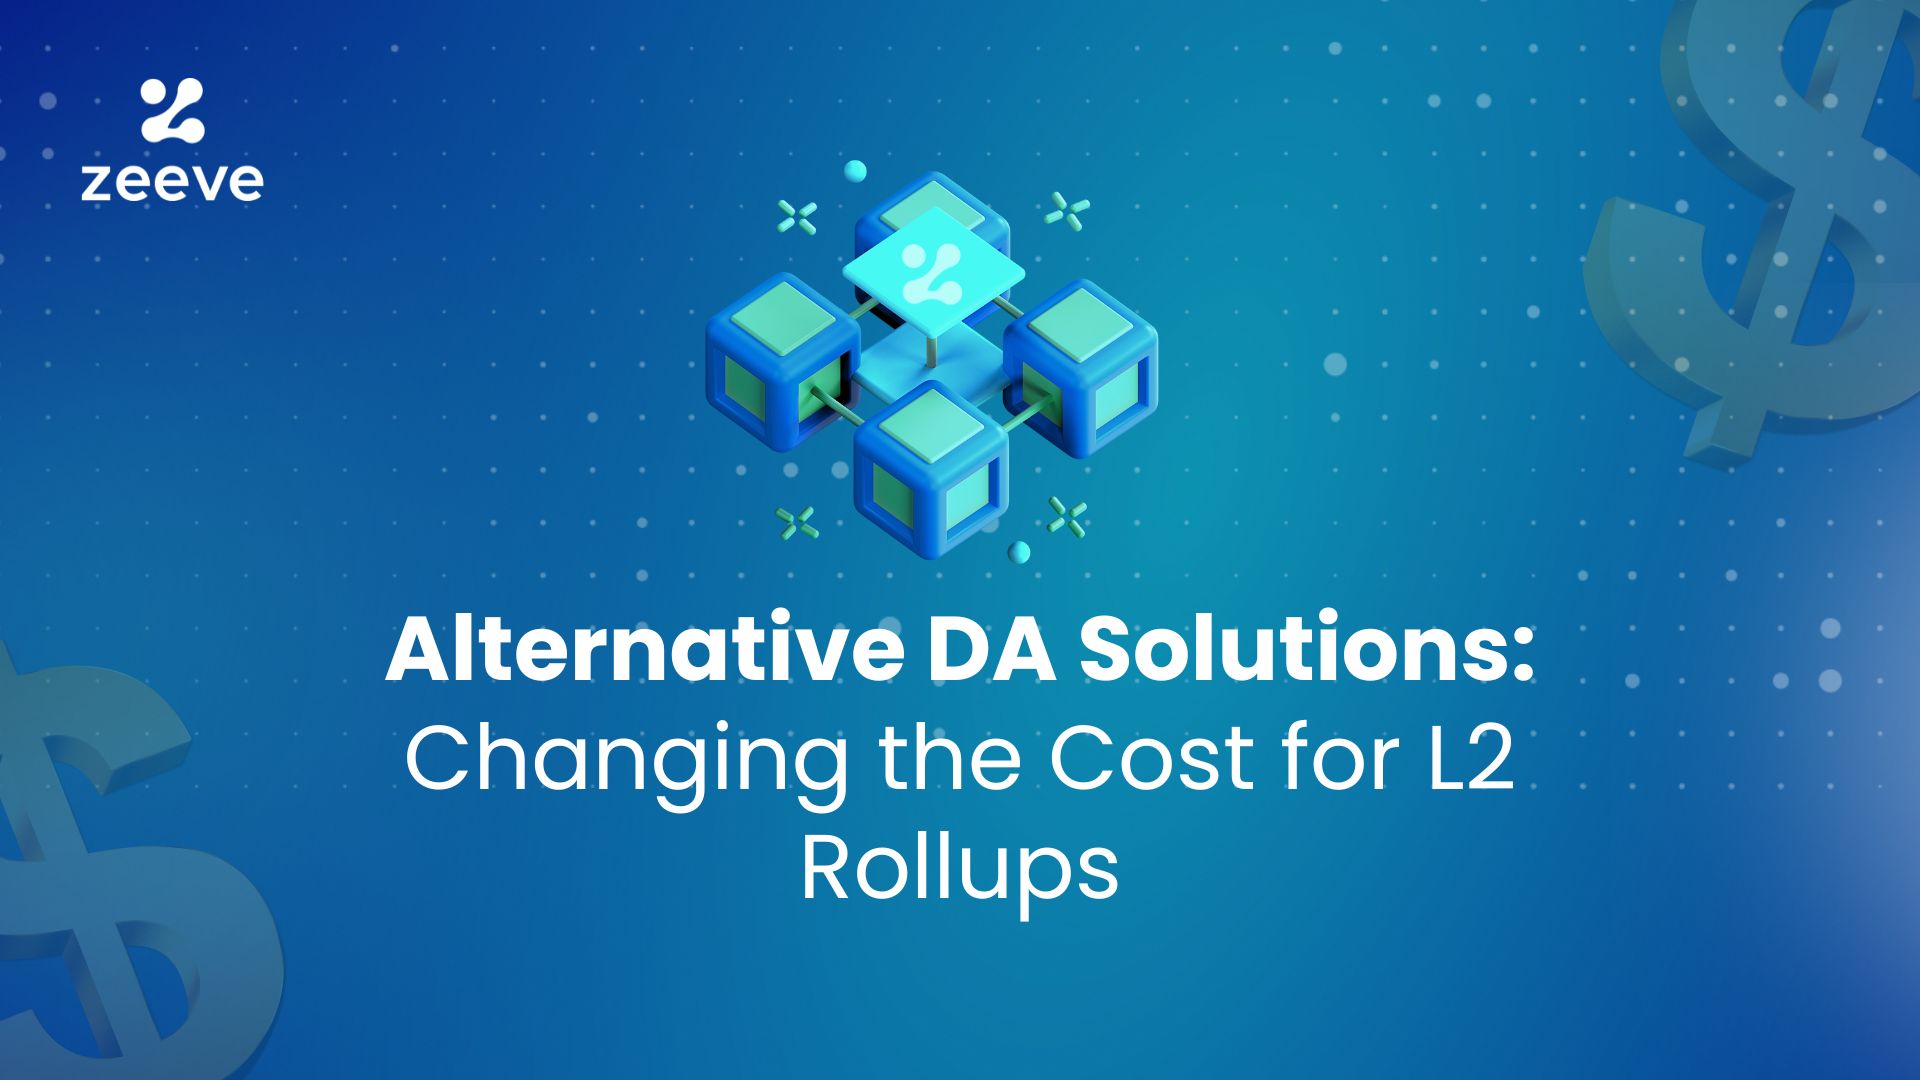 Alt Data solutions for rollups